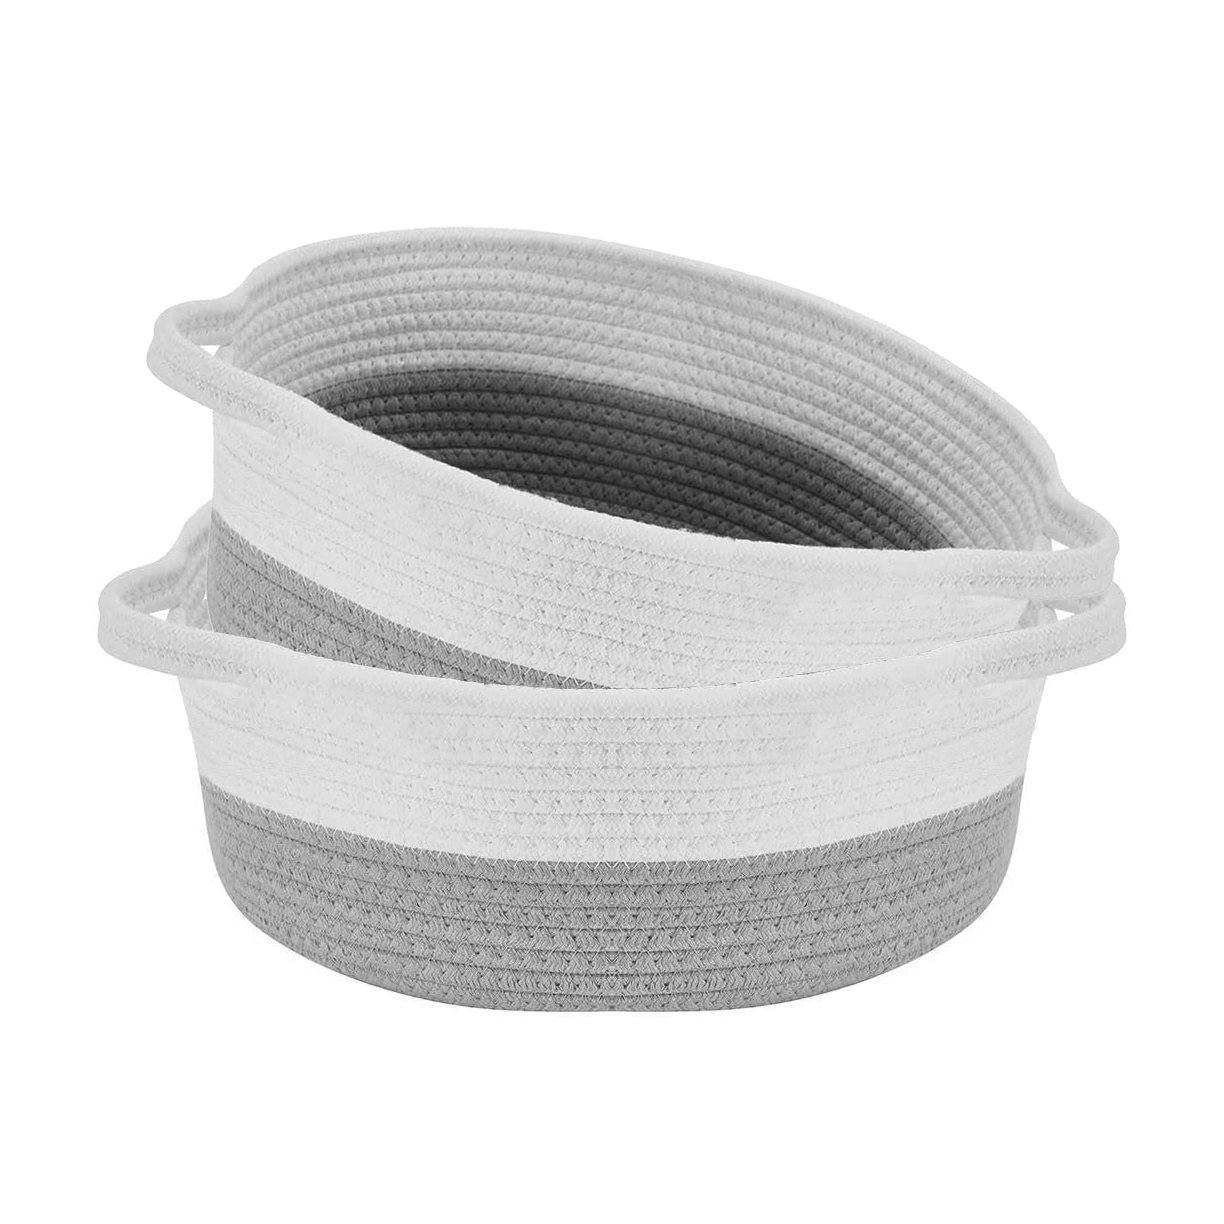 Decomomo Cotton Woven Rope Basket - Round Large (2 Pack)